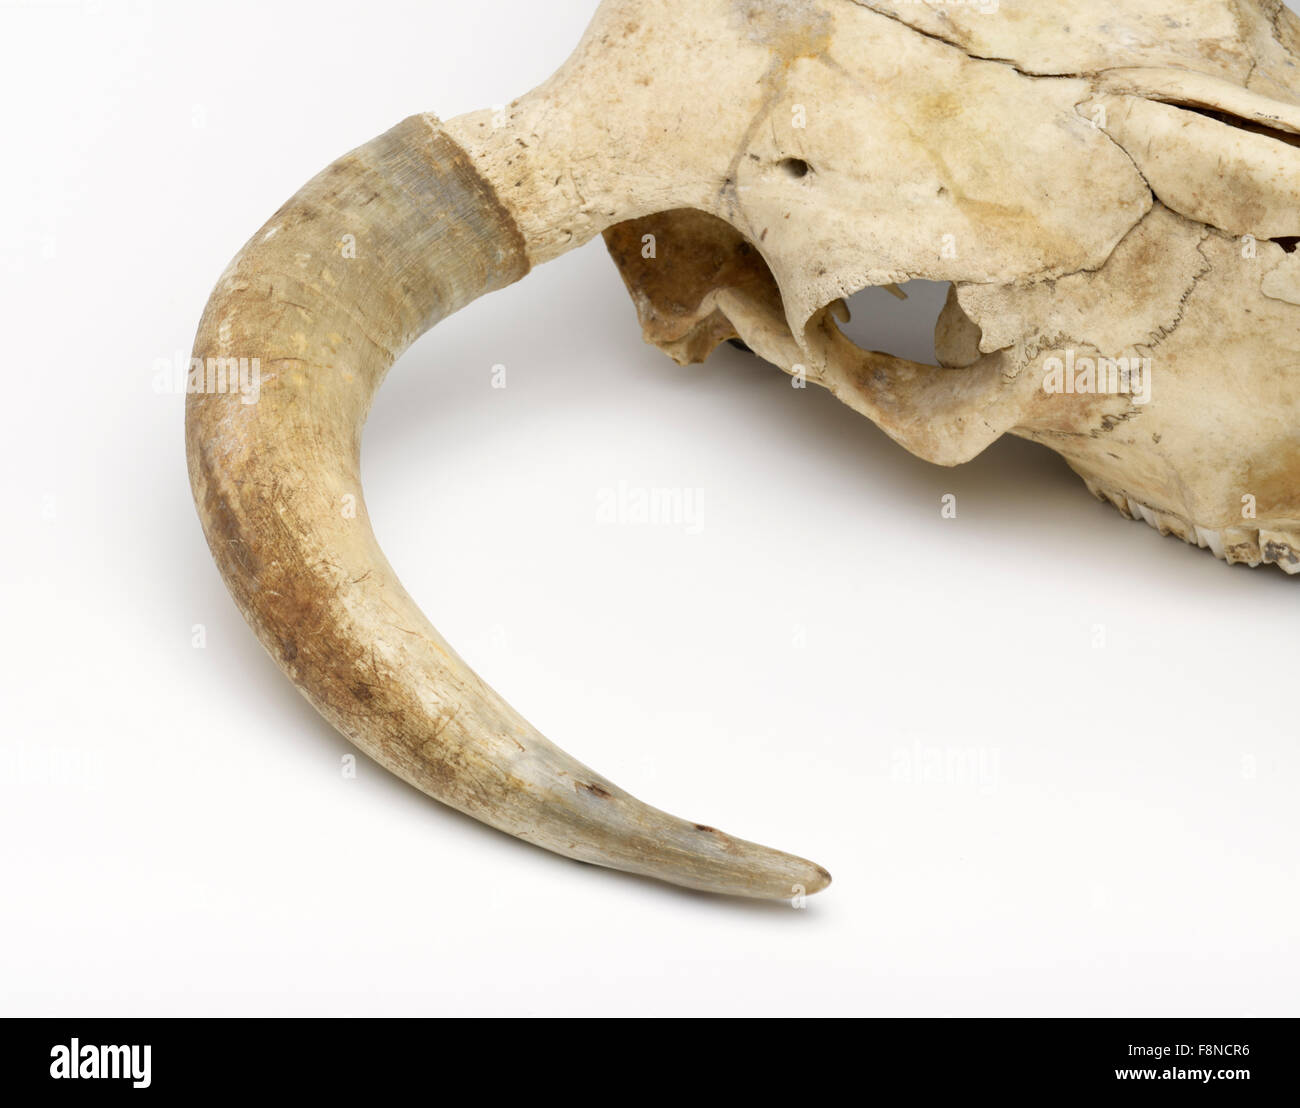 Cattle skull showing sheath of horn (keratin) over underlying bone Stock Photo